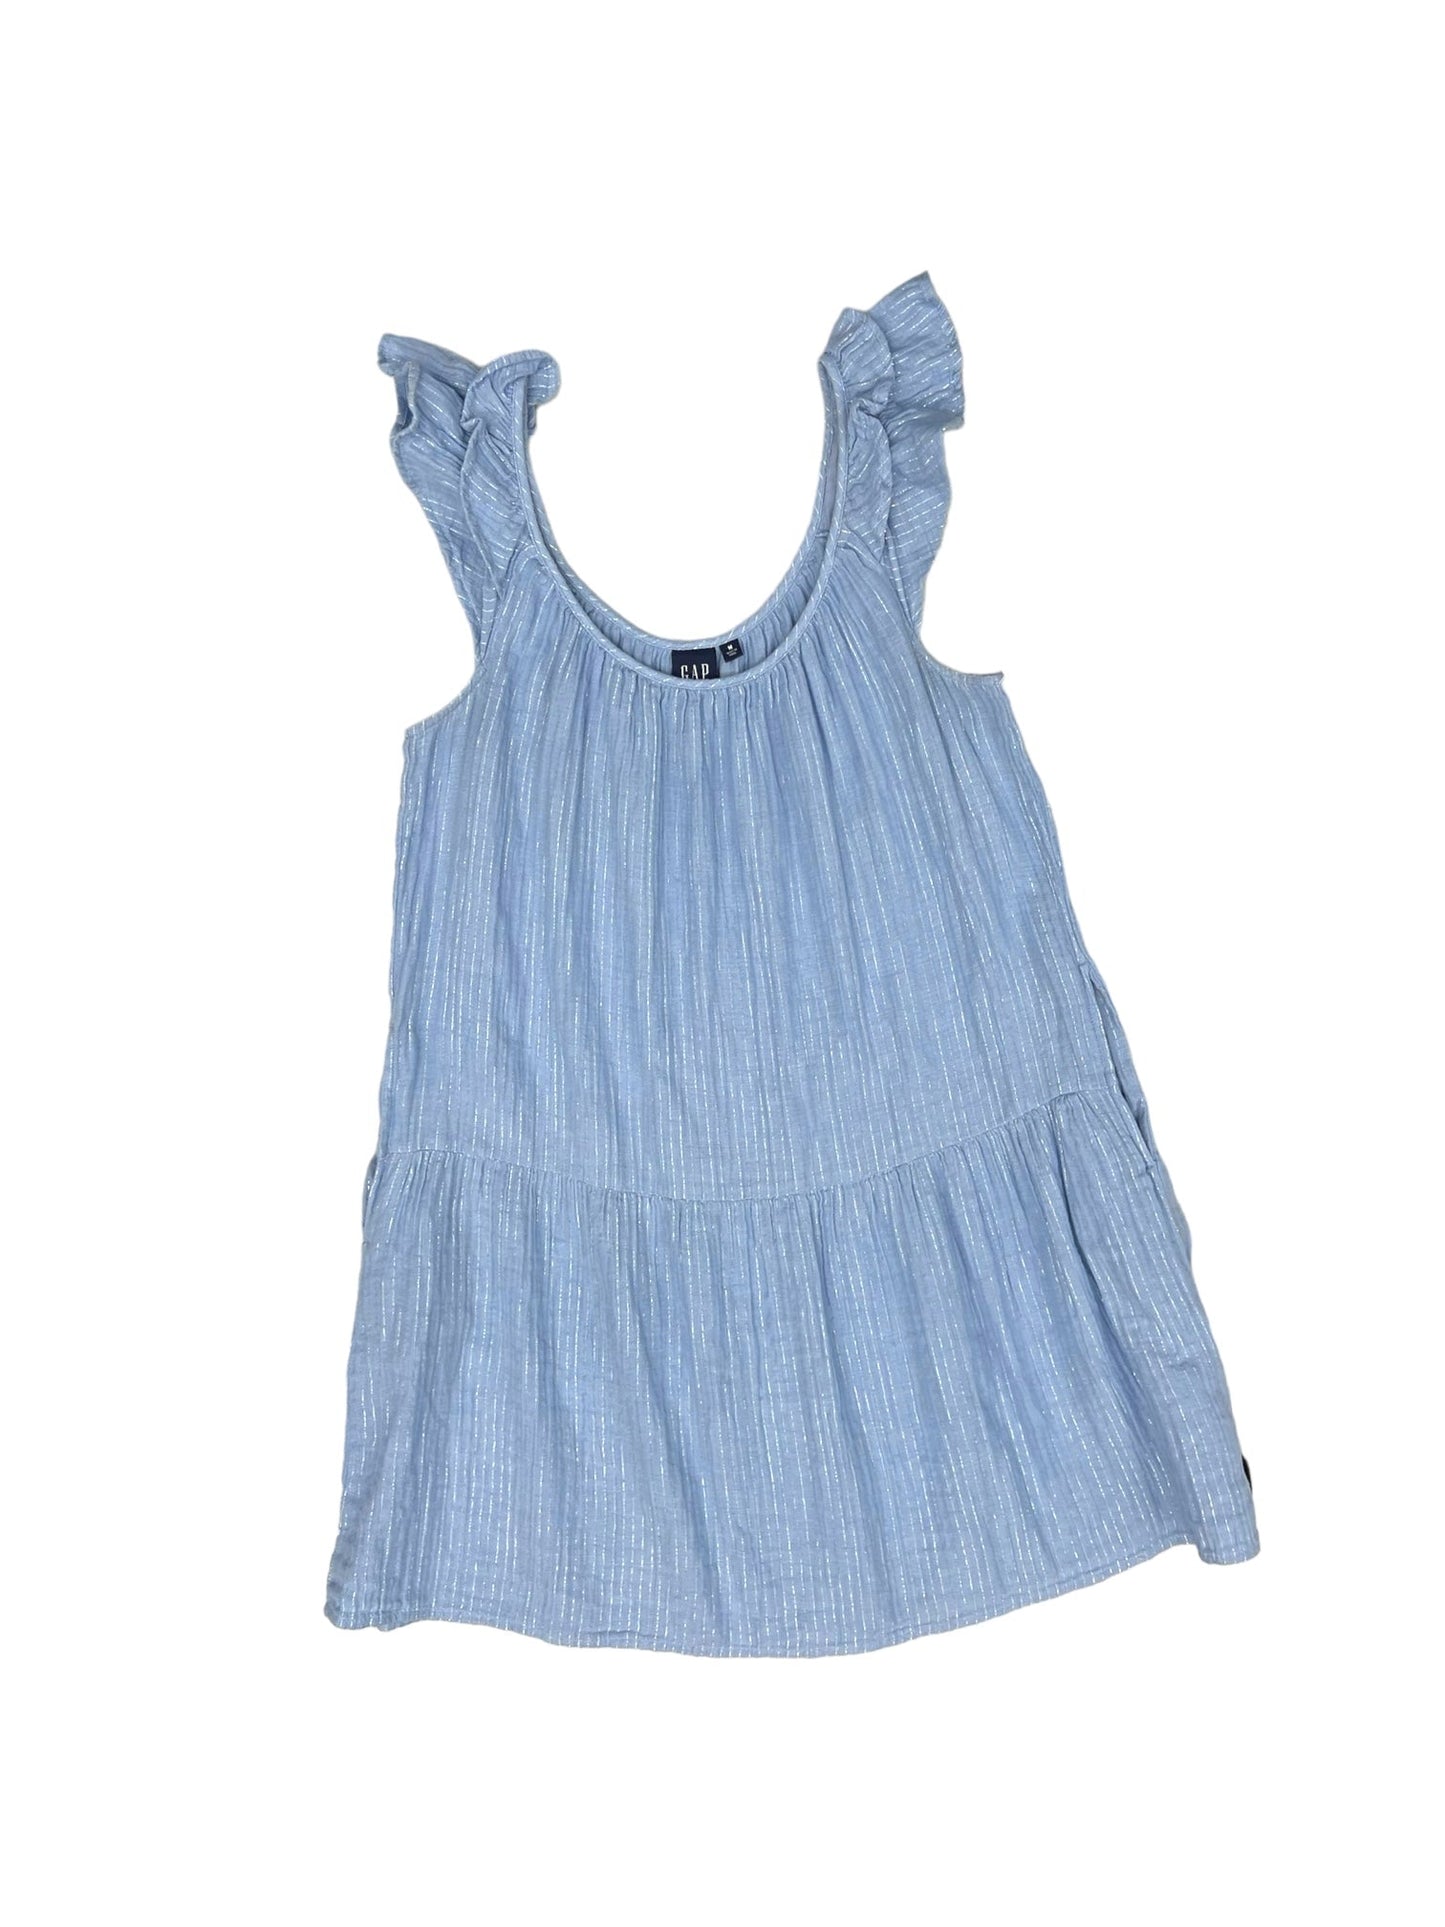 Blue Dress Casual Short Gap, Size M